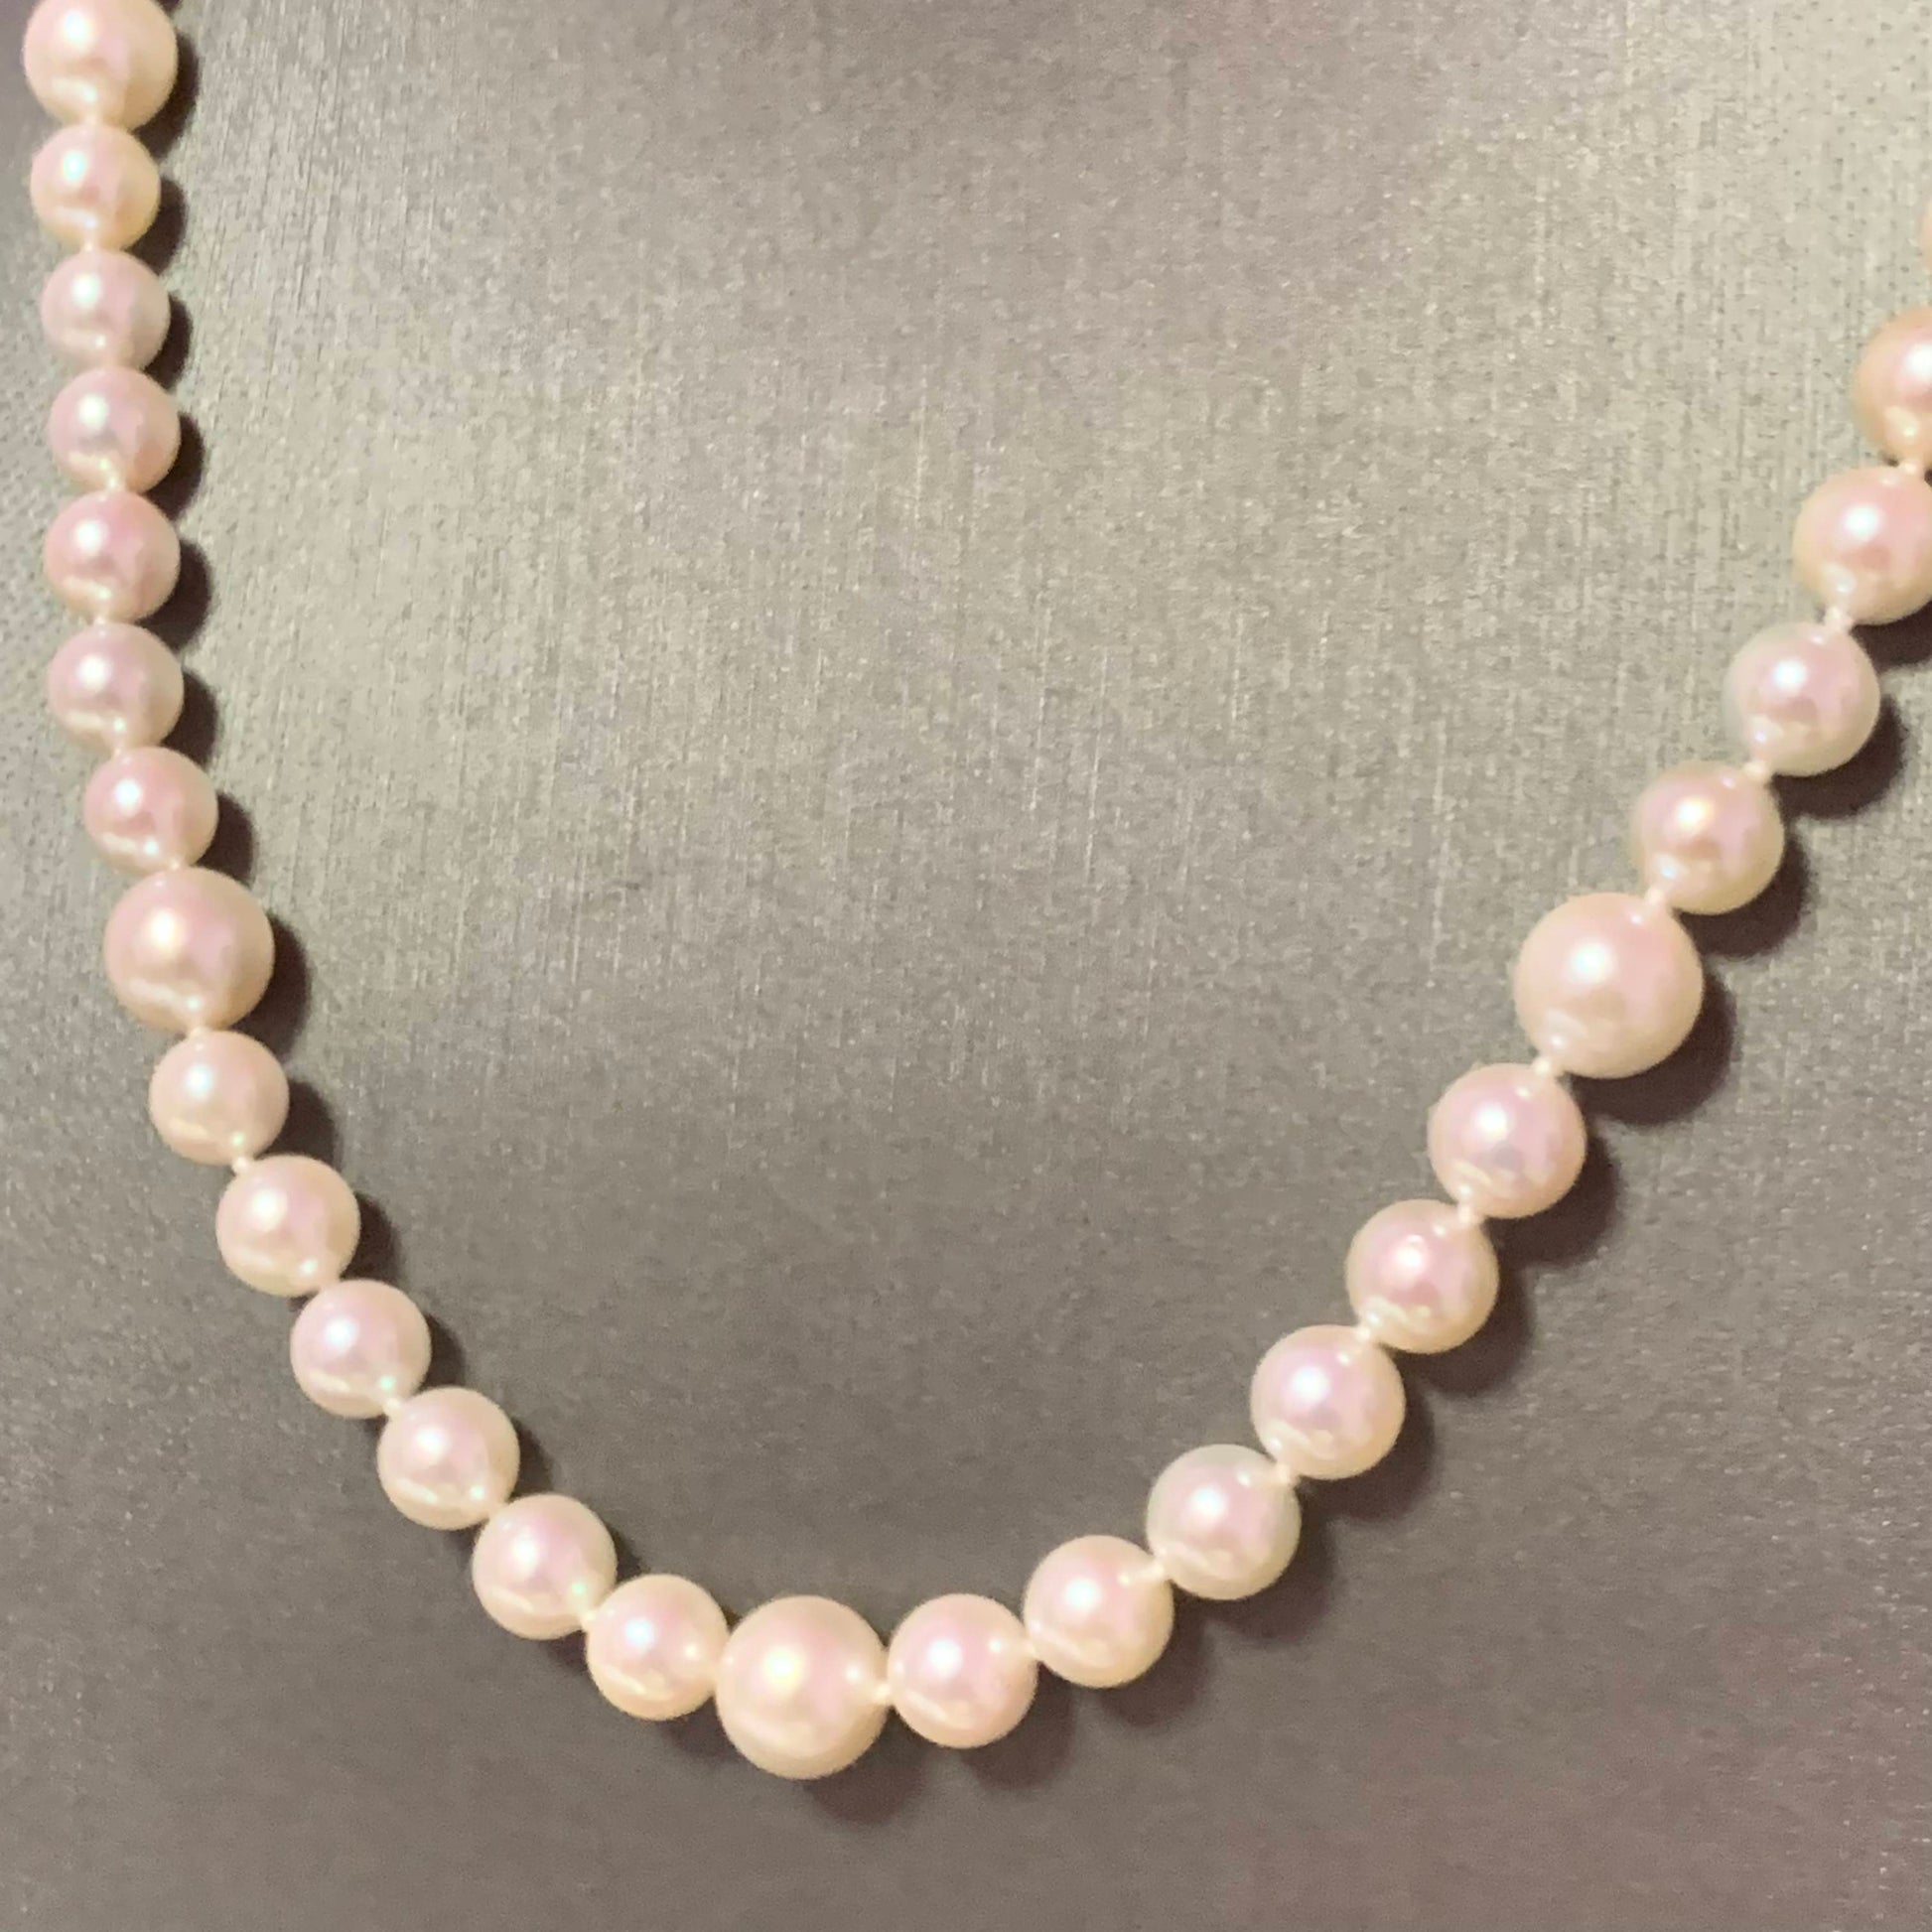 Akoya Pearl Necklace 14k Gold 18" 8.5 mm Certified $3,975 114987 - Certified Estate Jewelry